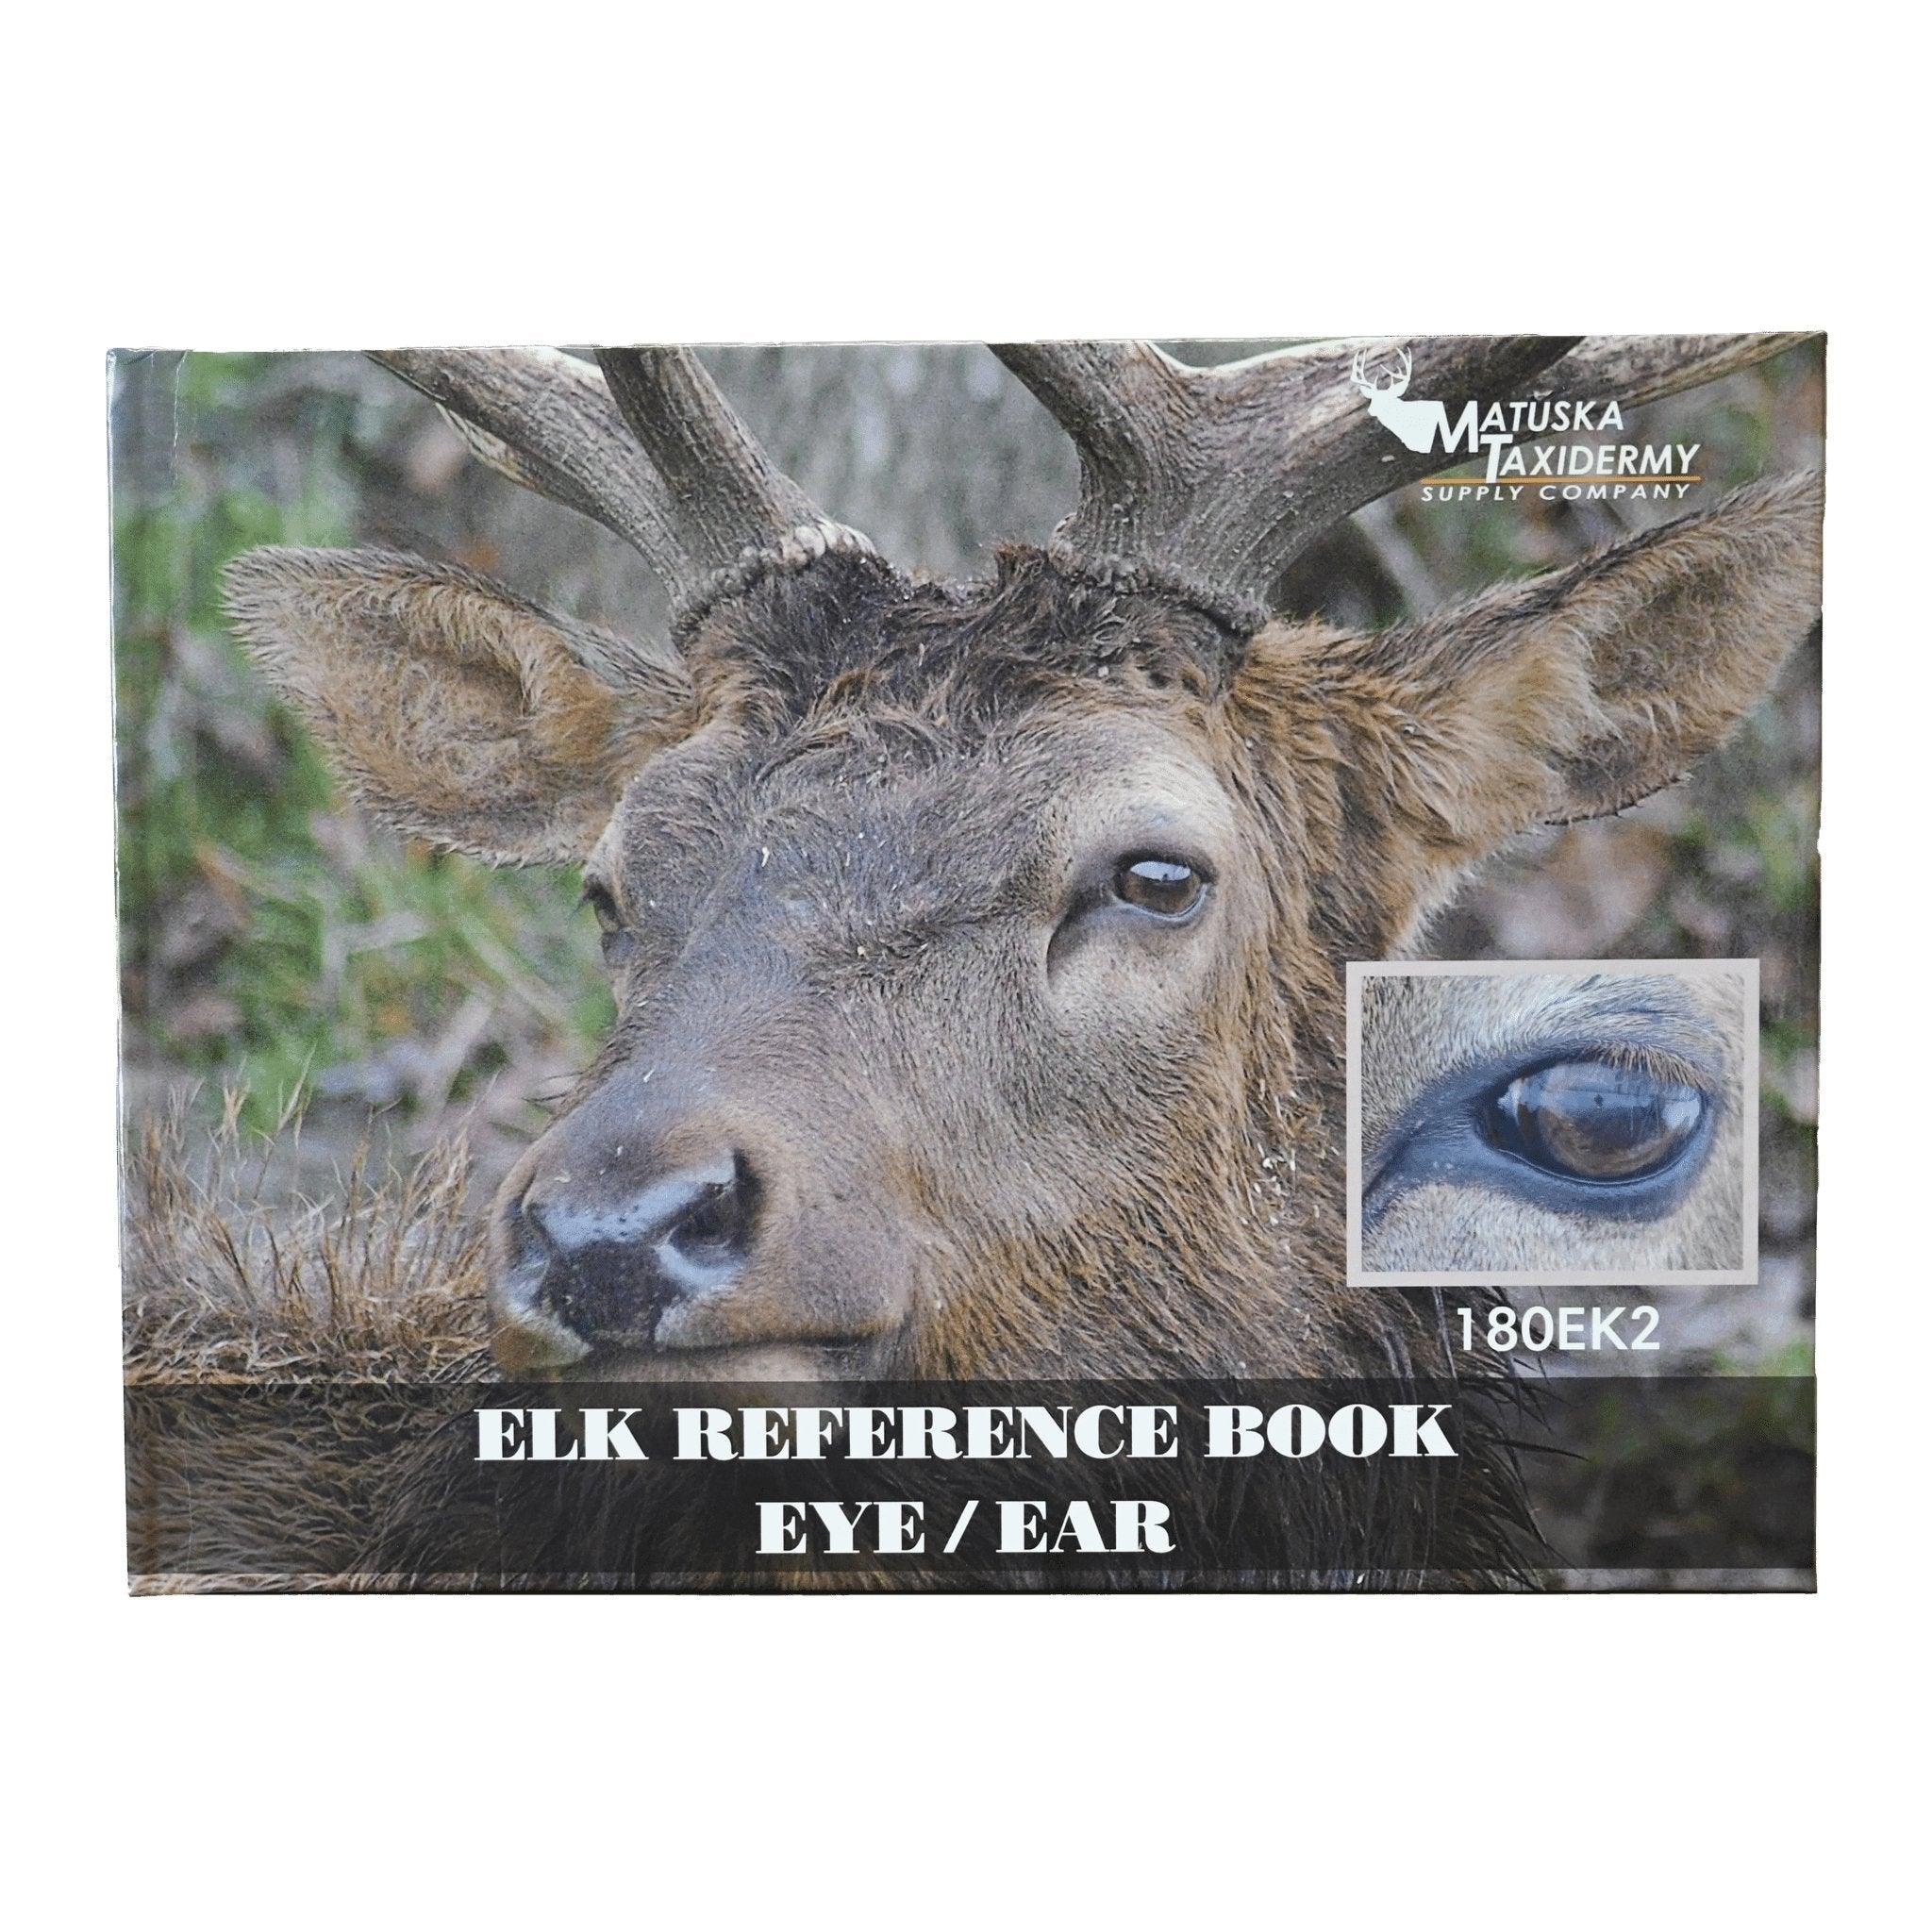 Elk Reference Books by Phil Wilson - Matuska Taxidermy Supply Company